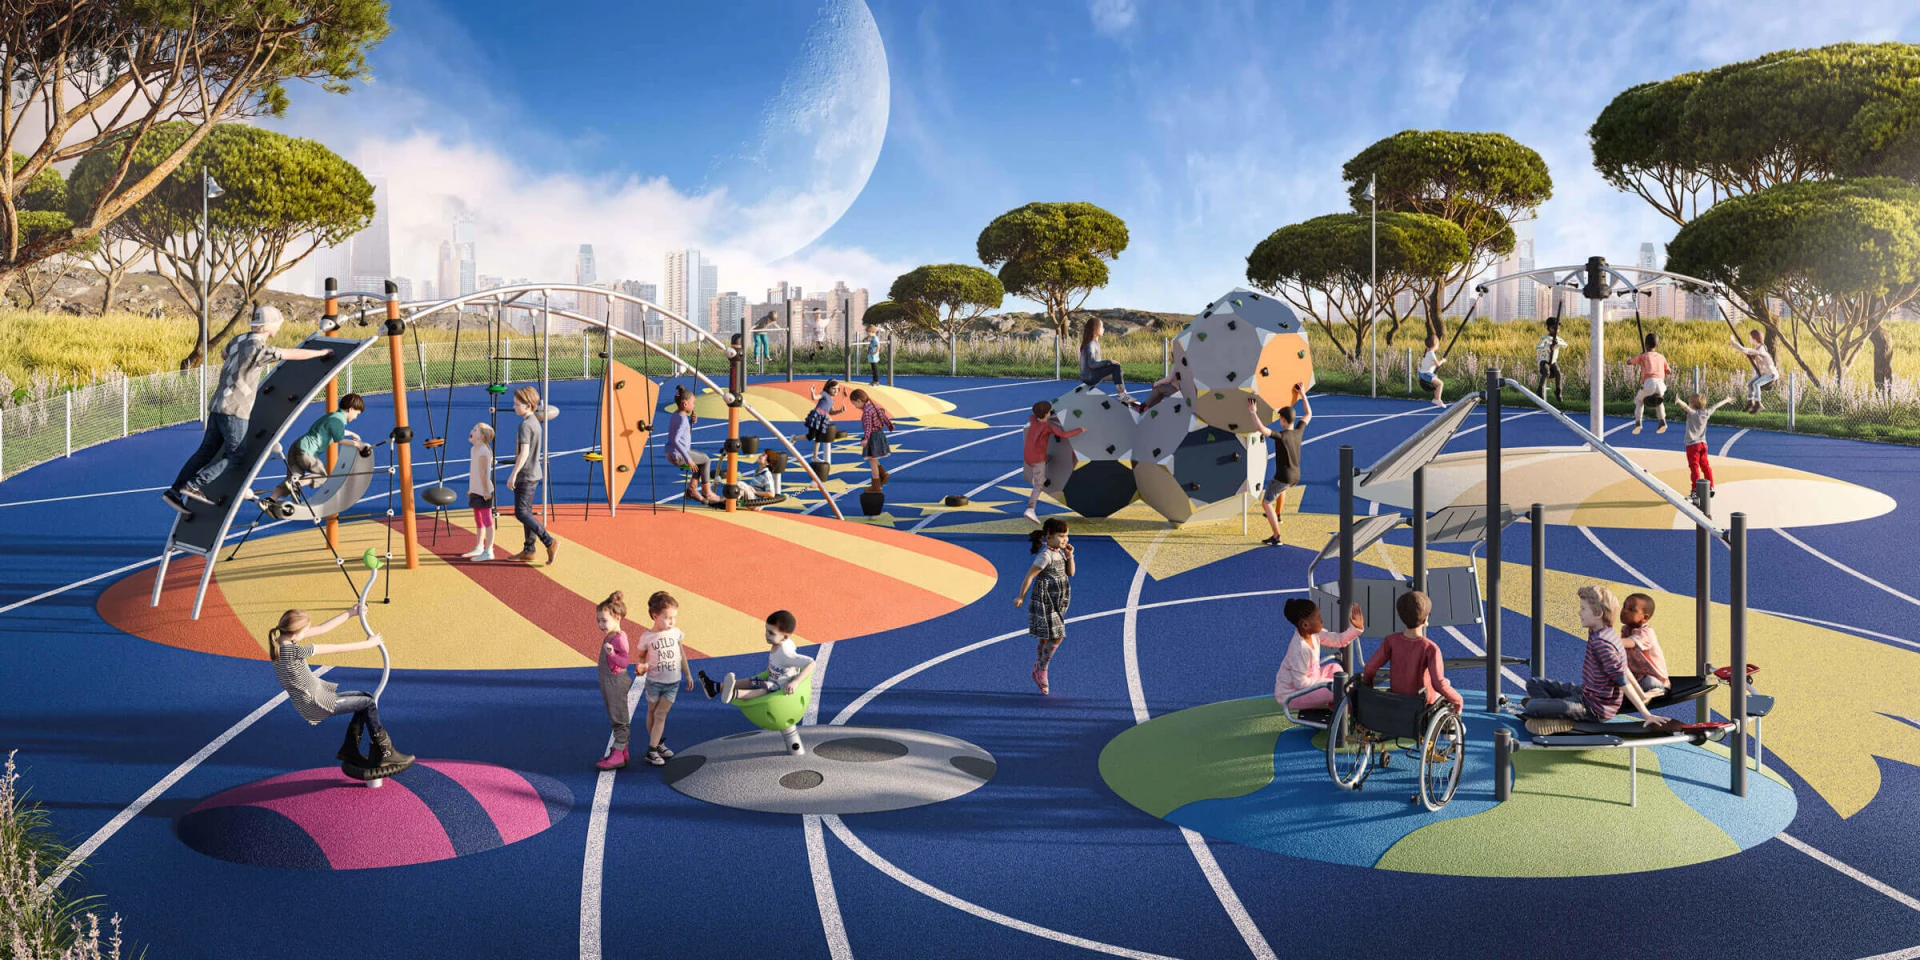 Idea conceptual de un parque infantil con temática espacial